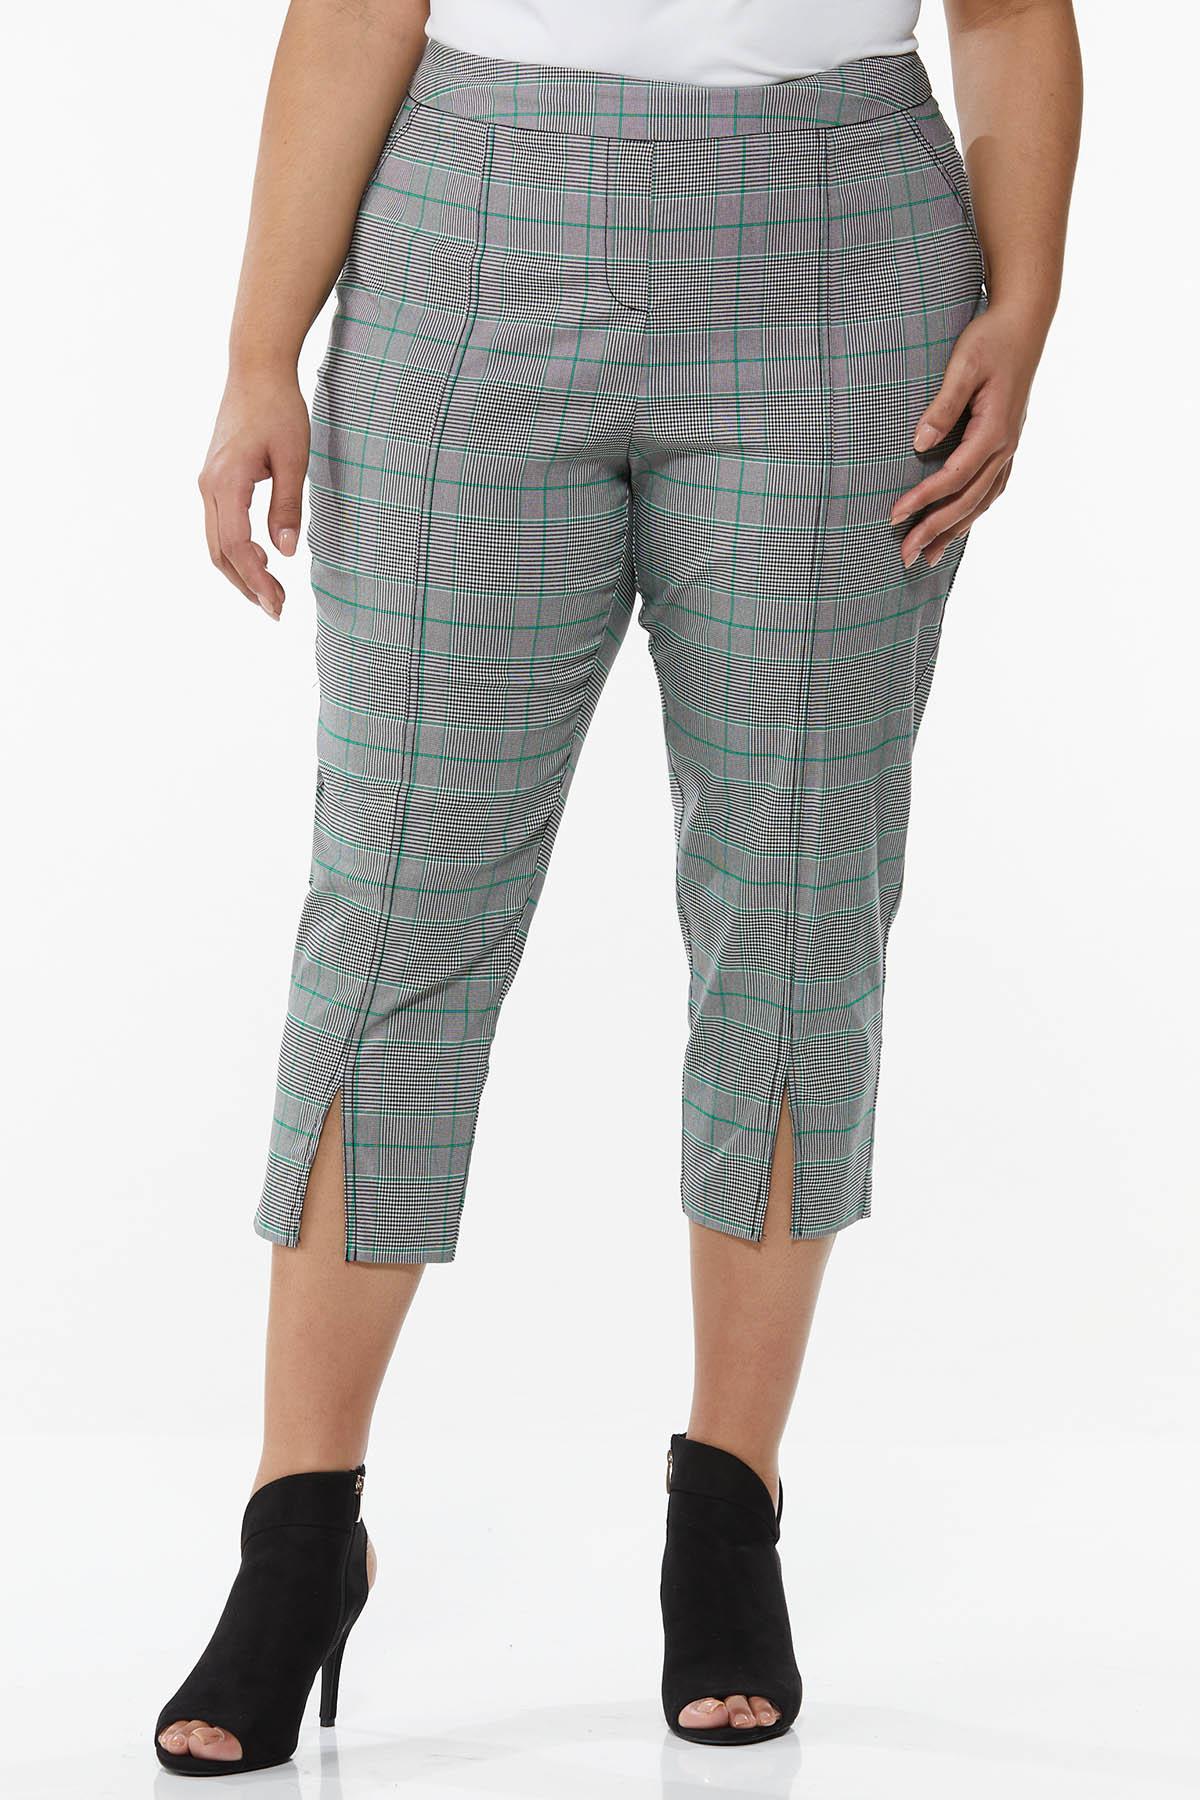 Plus Size Cropped Green Plaid Pants